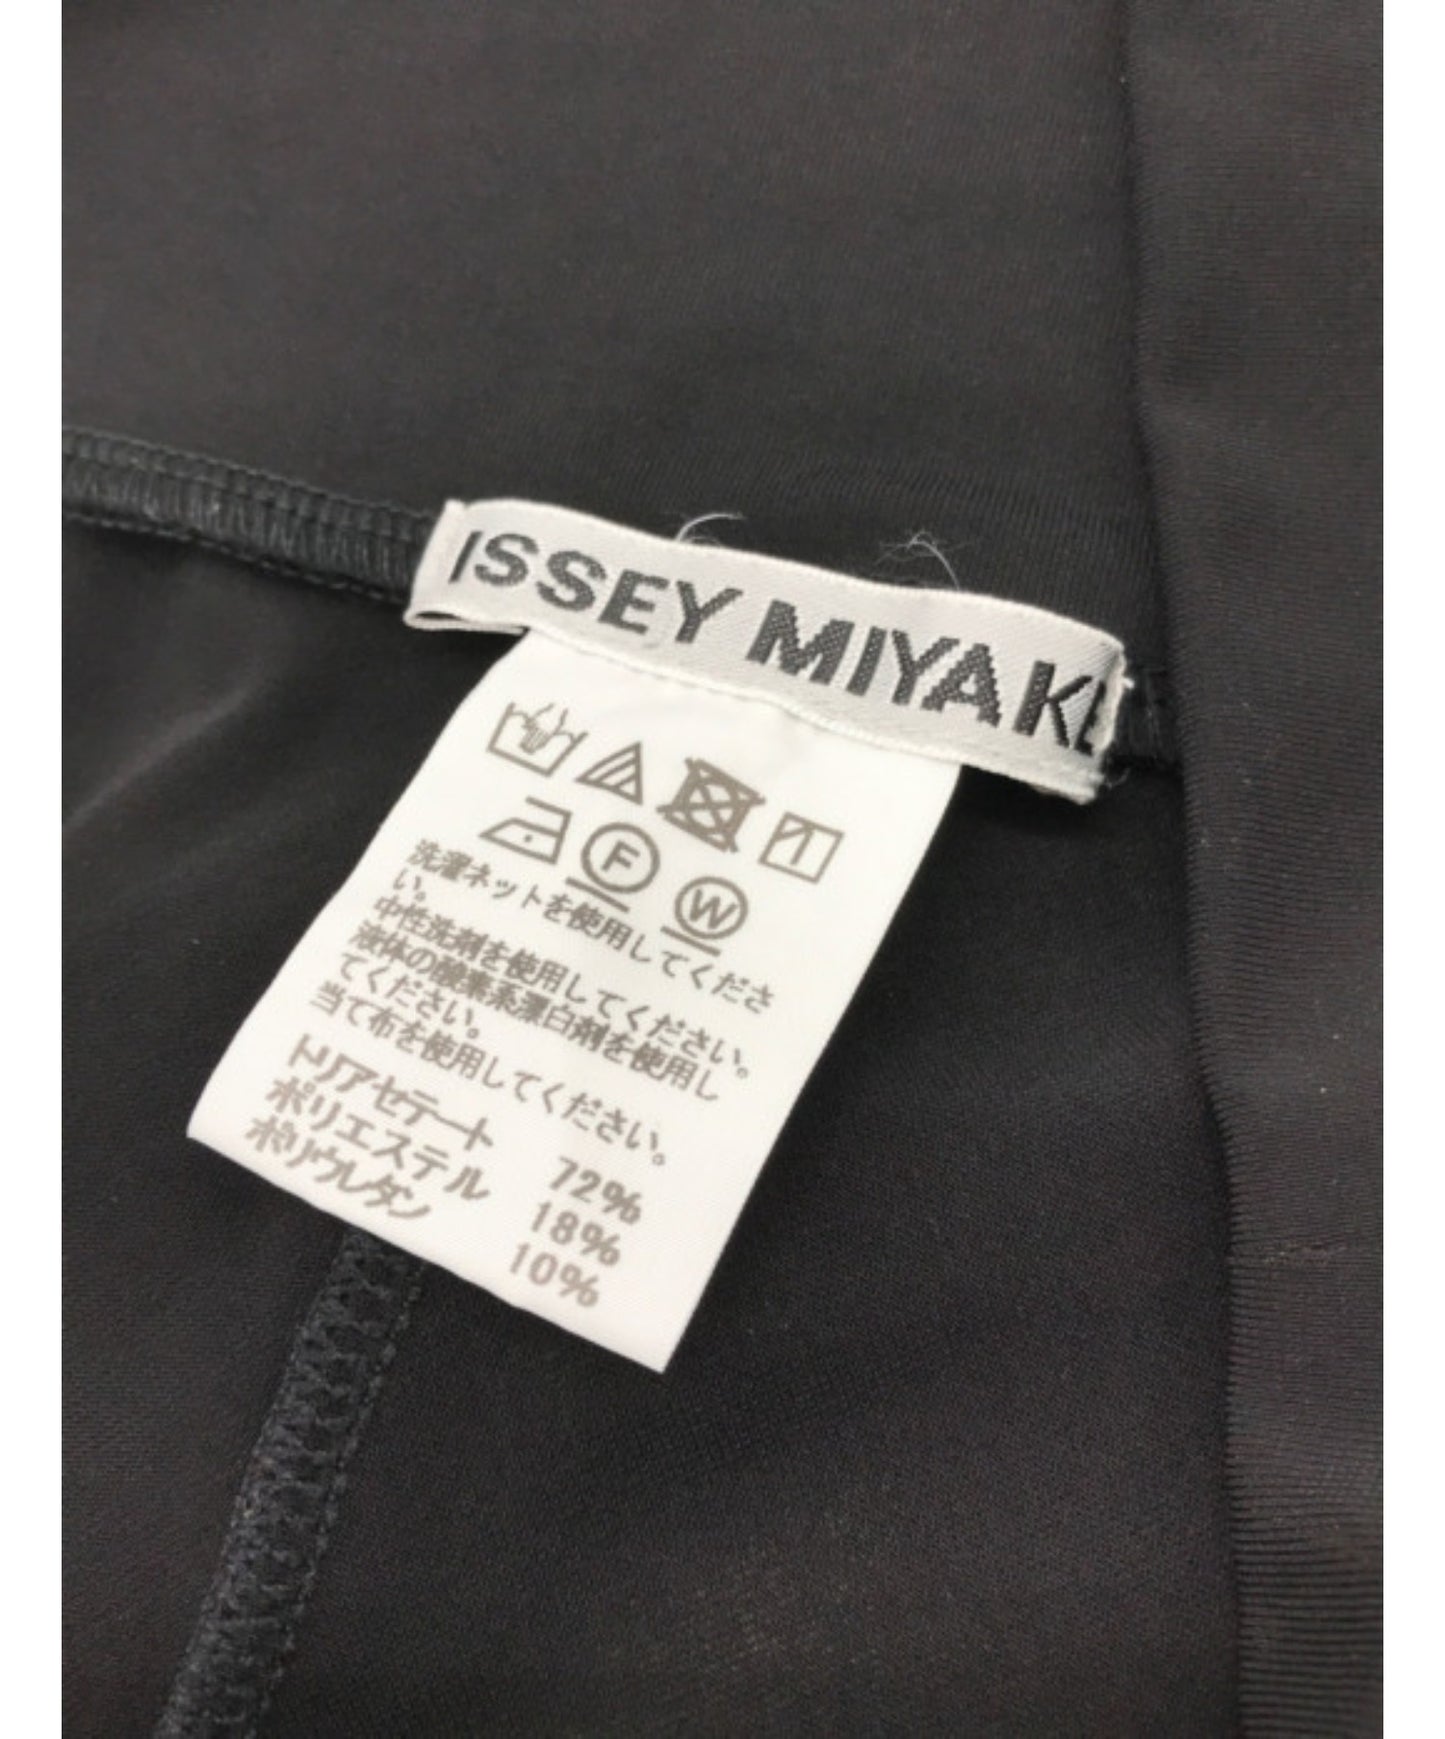 Issey Miyake Drape澤西披風球衣Sarouel褲子